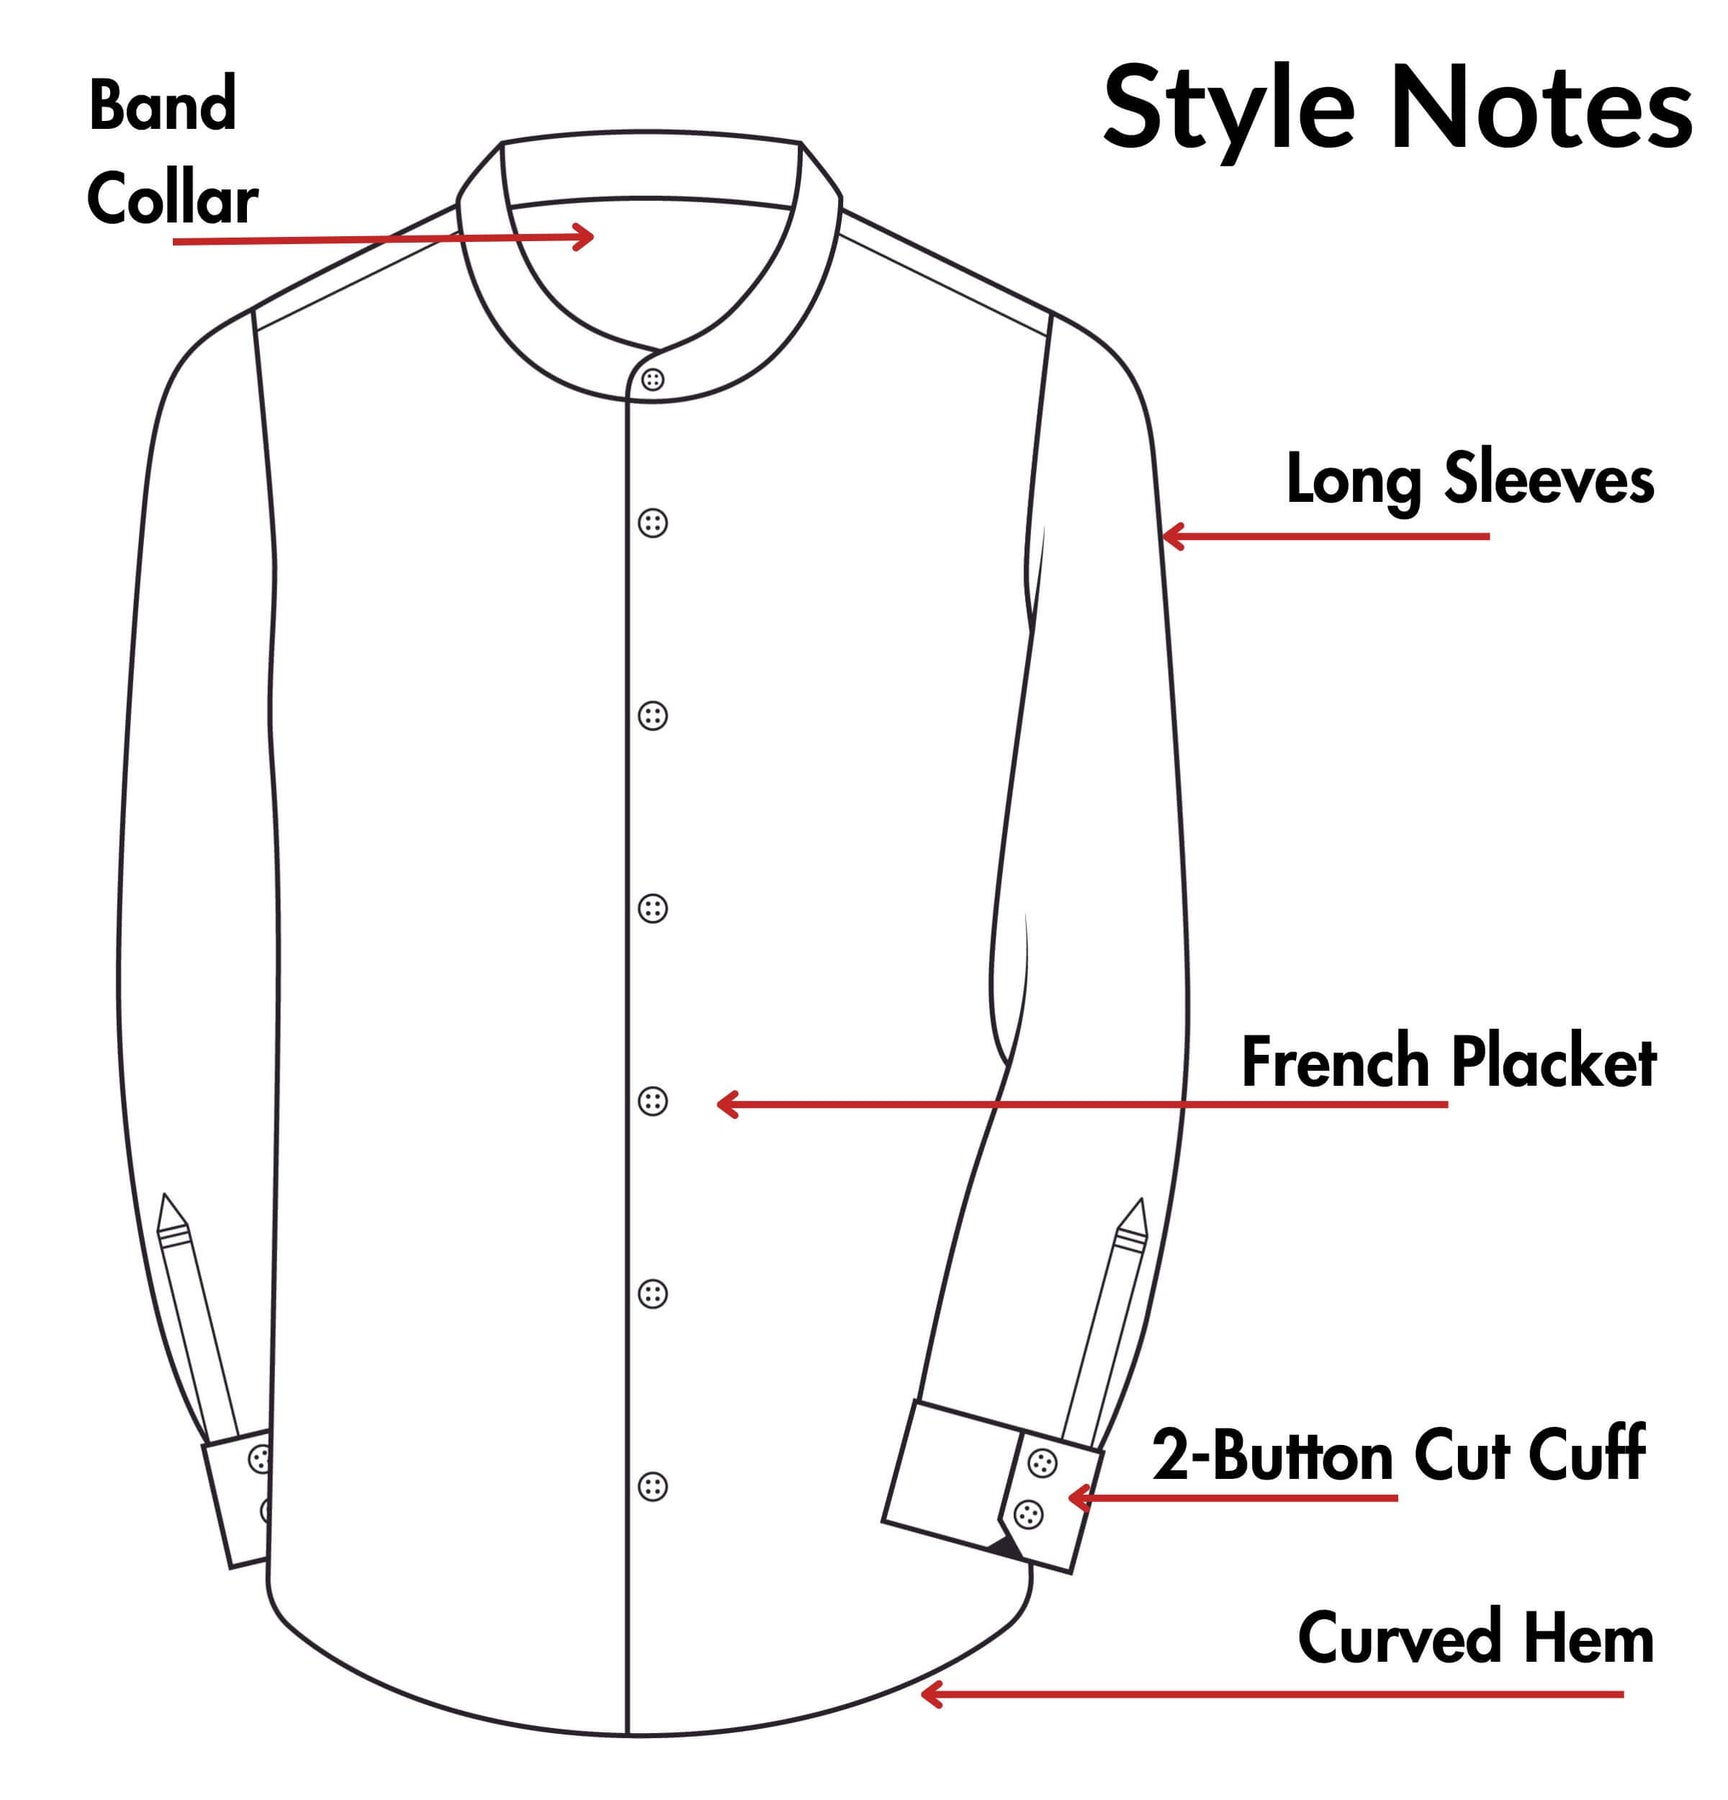 Long Sleeve Band Collar Shirt